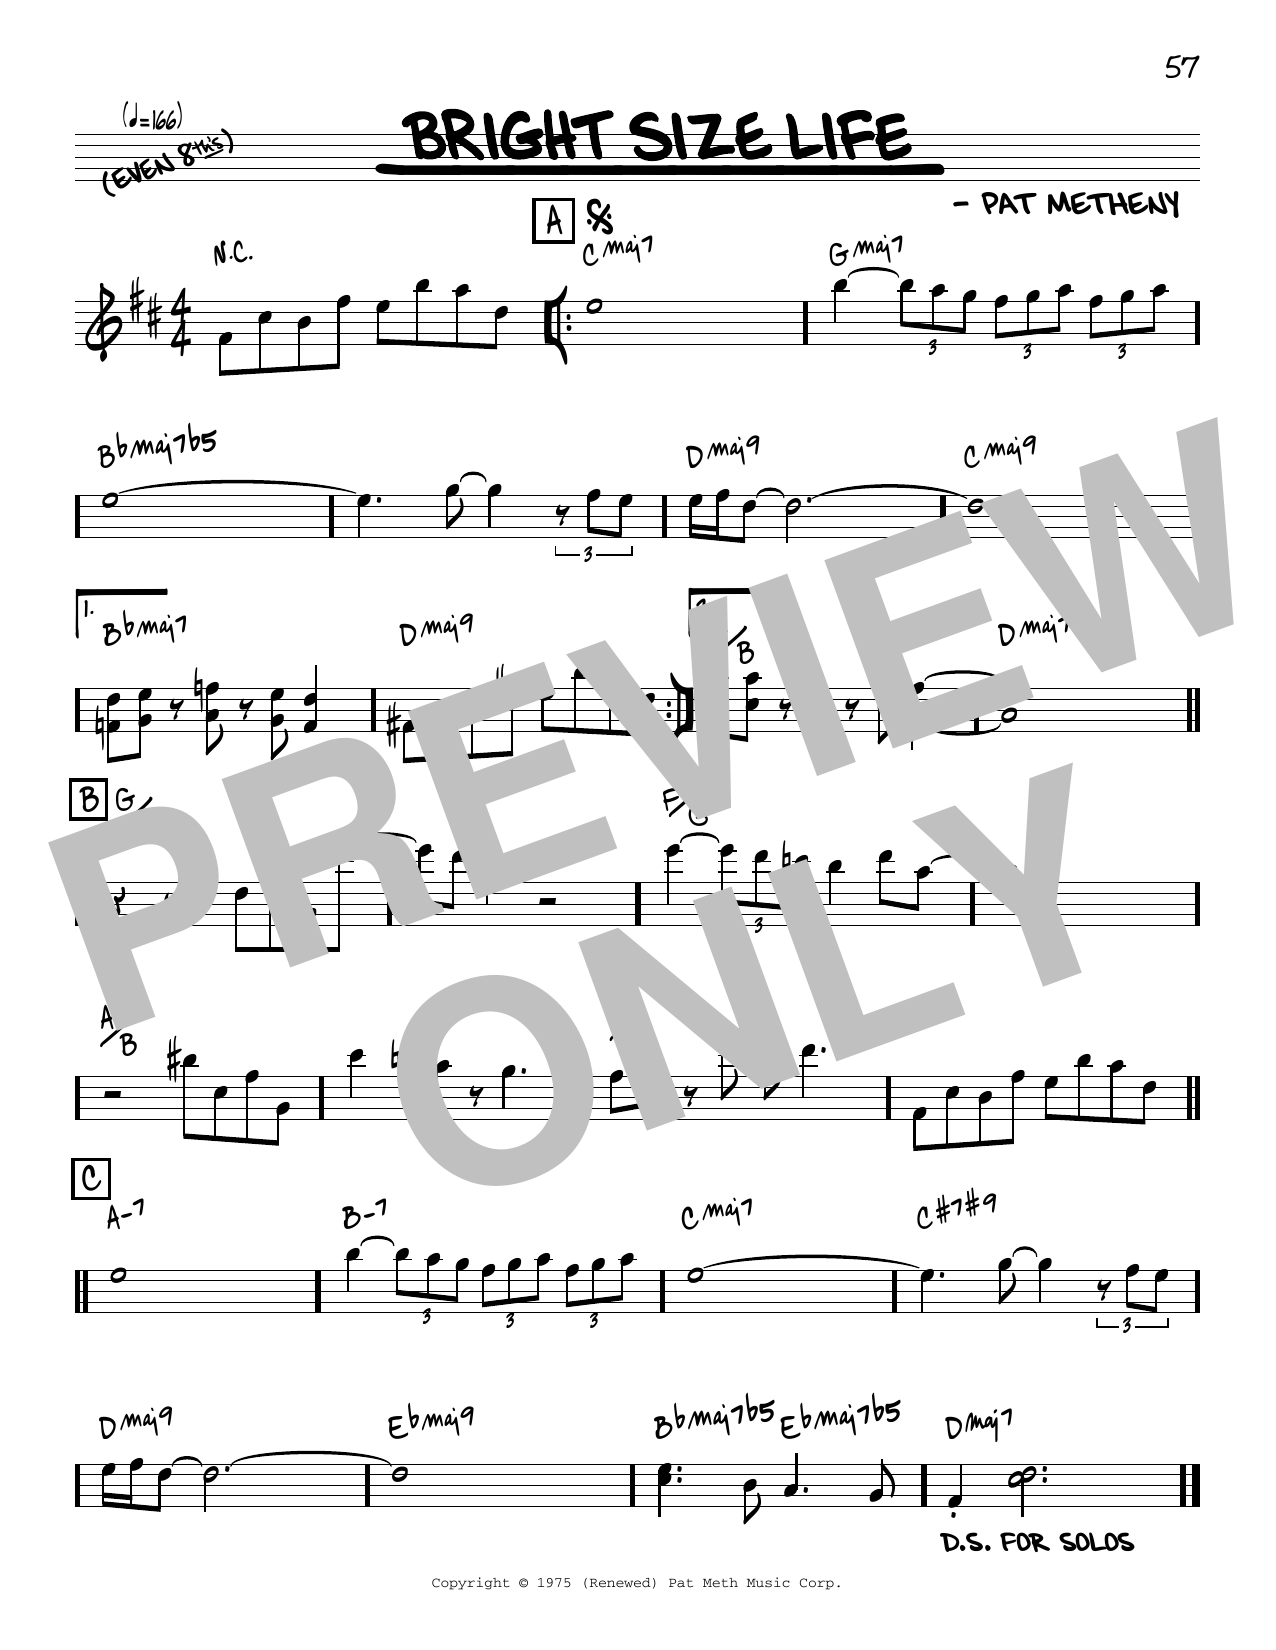 Download Pat Metheny Bright Size Life [Reharmonized version] Sheet Music